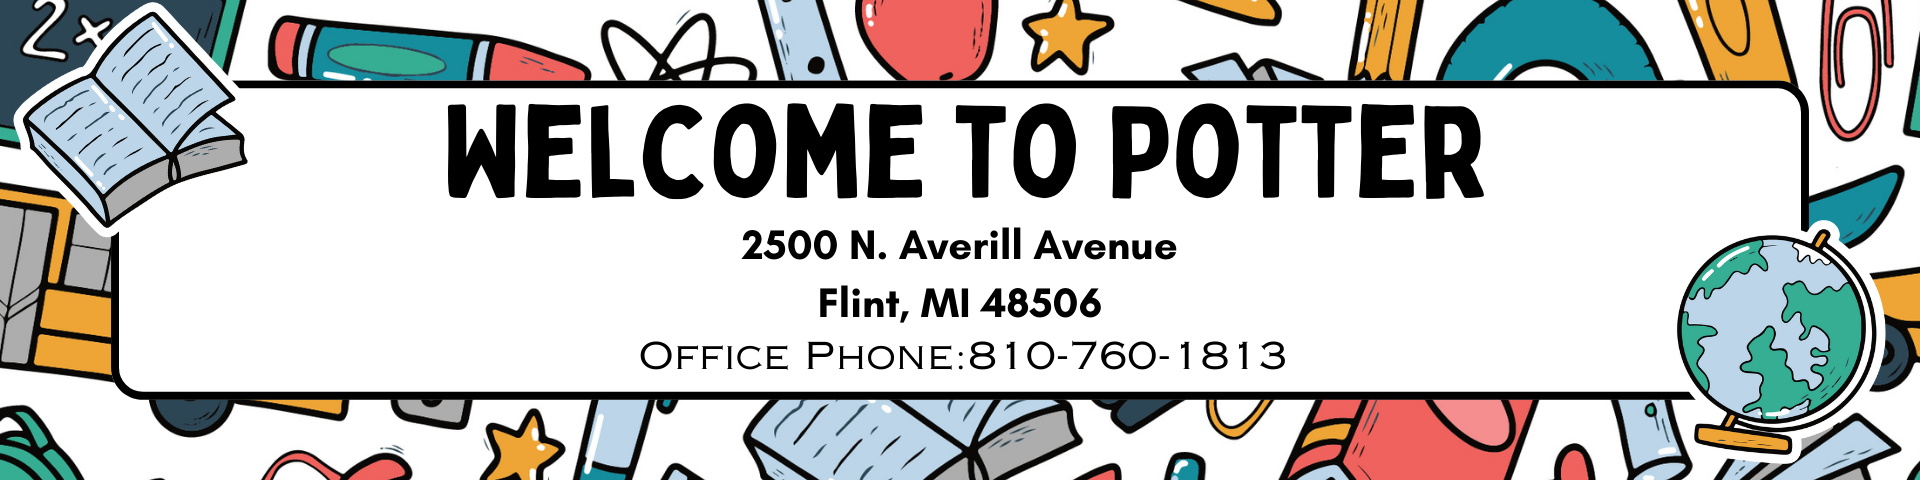 Welcome to Potter 2500 N. Averill Avenue Flint, MI 48506 Phone 810-760-1813